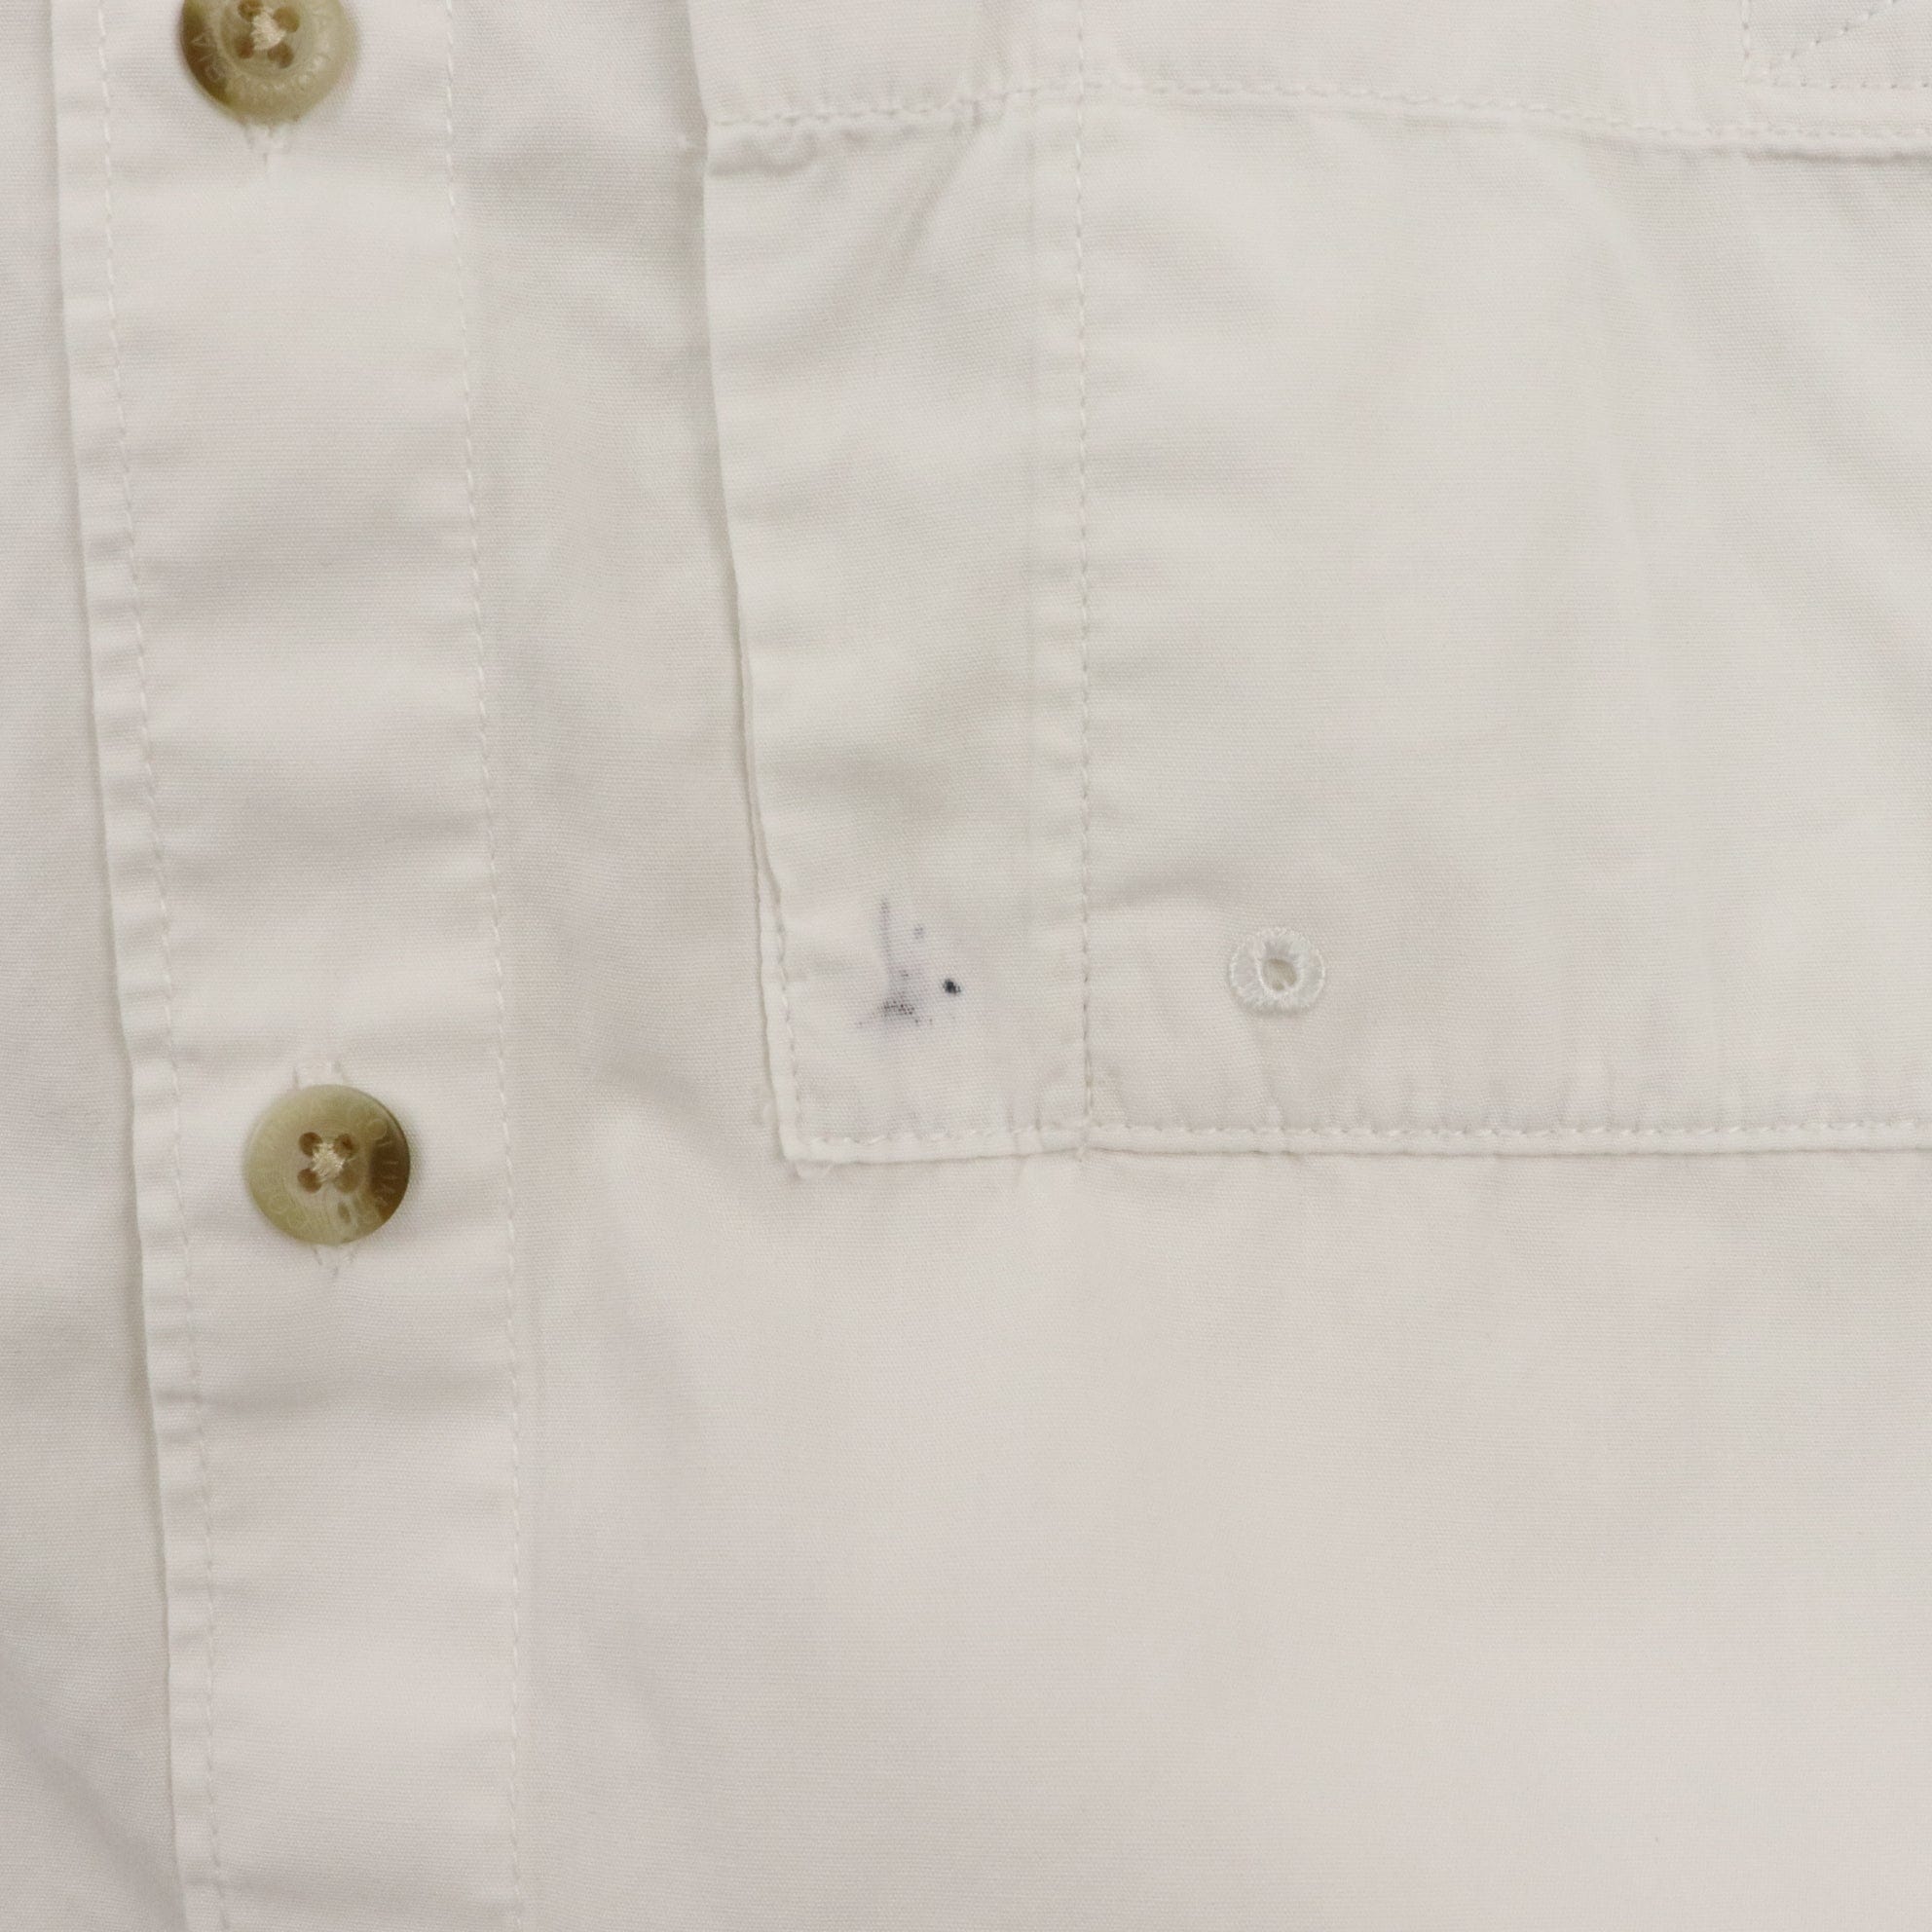 Vintage Columbia Shirt Mens Medium White Fishing Button Up Outdoors –  Proper Vintage